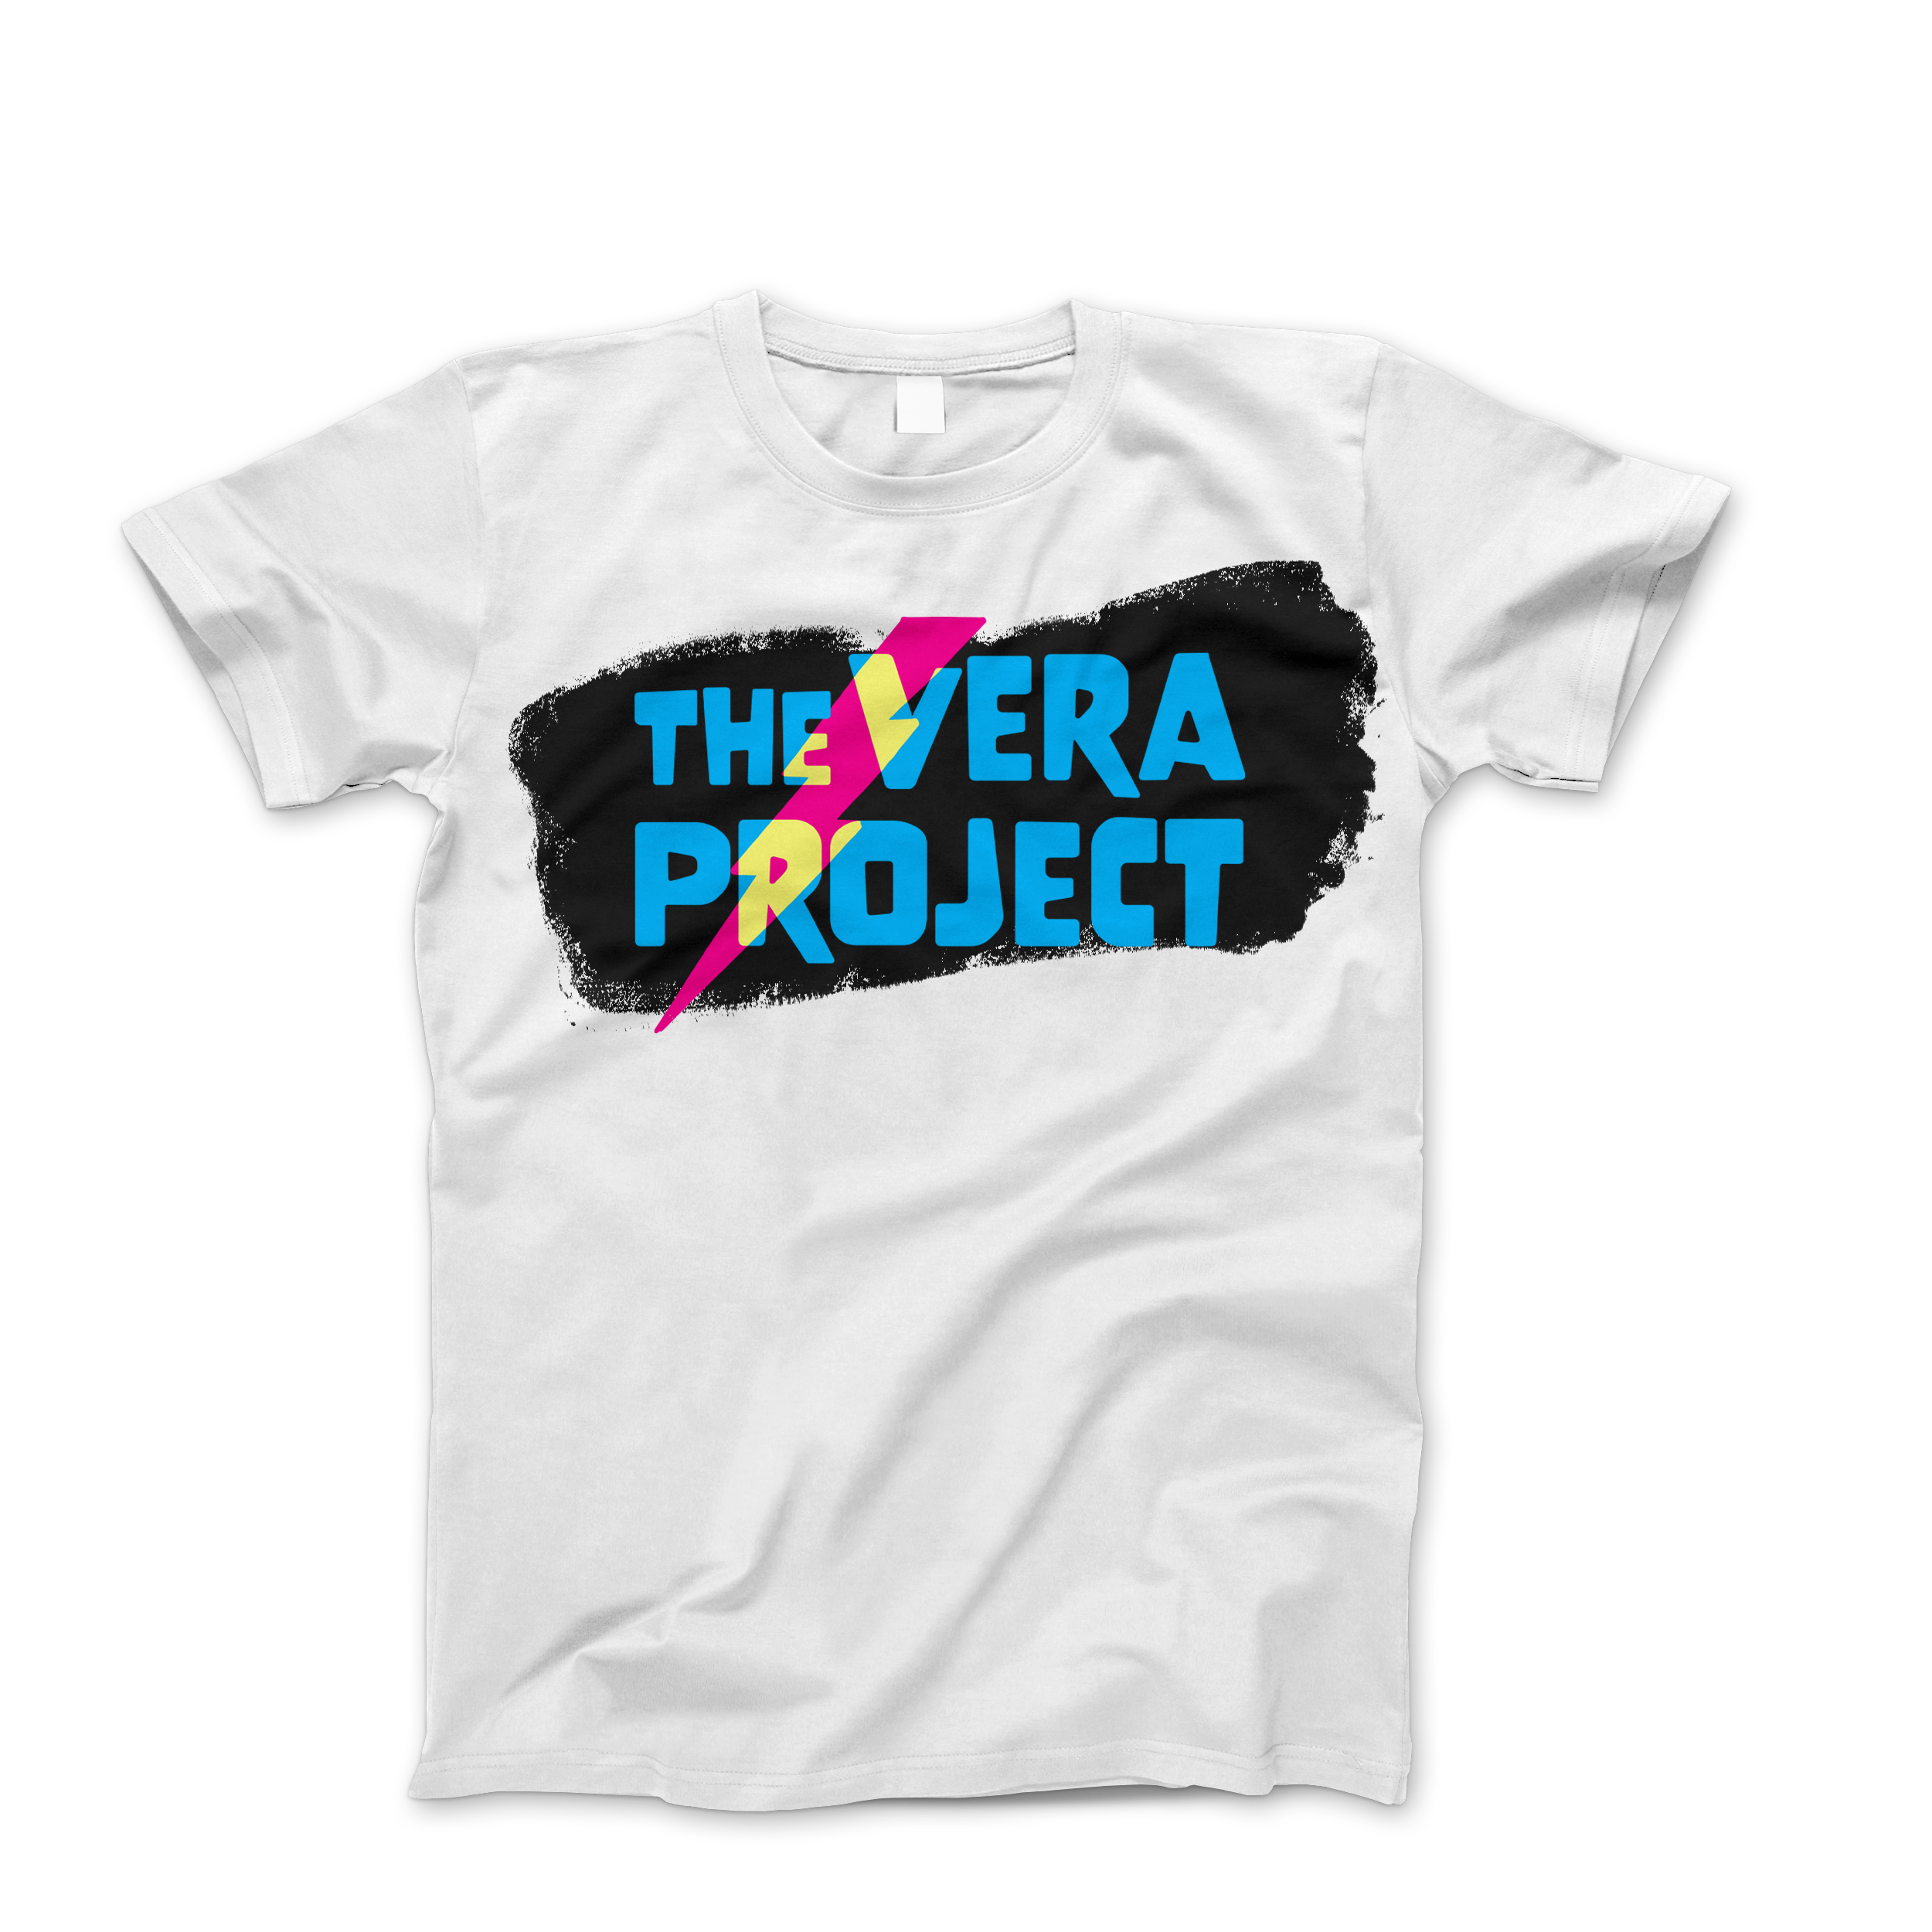 The Vera Project Jake Levin